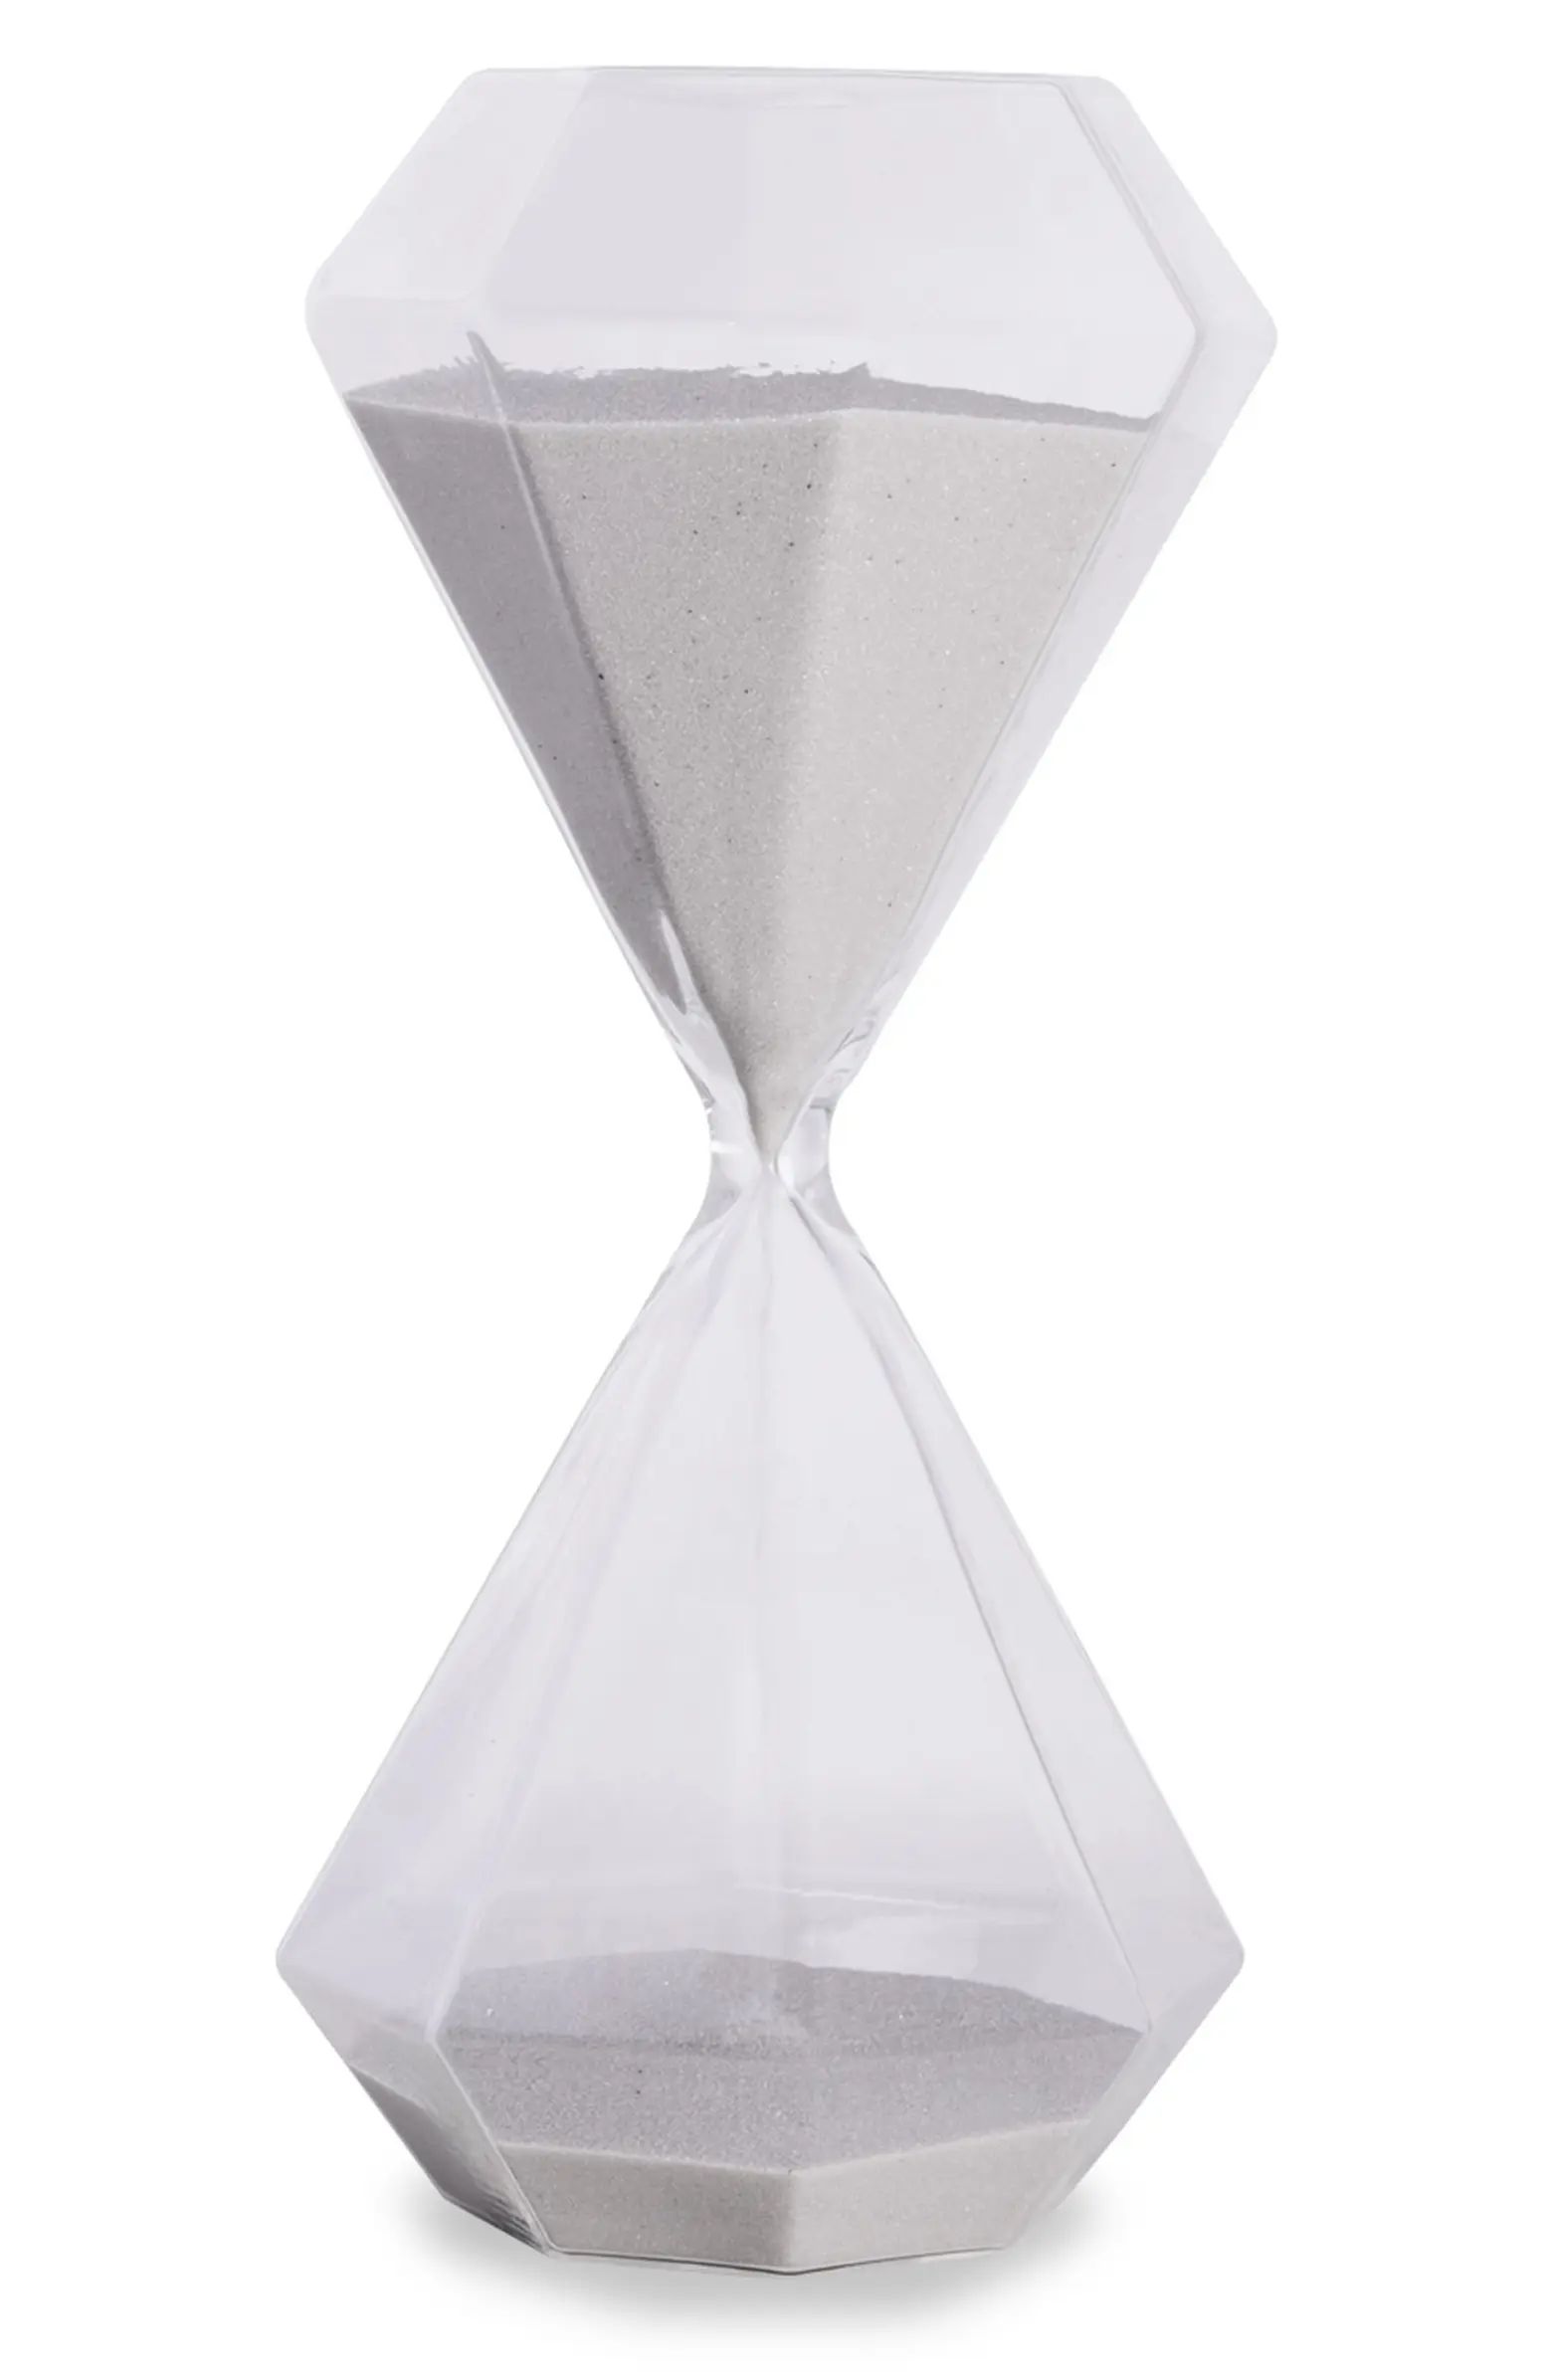 Bey-Berk 45-Minute Hourglass Sand Timer | Nordstrom | Nordstrom